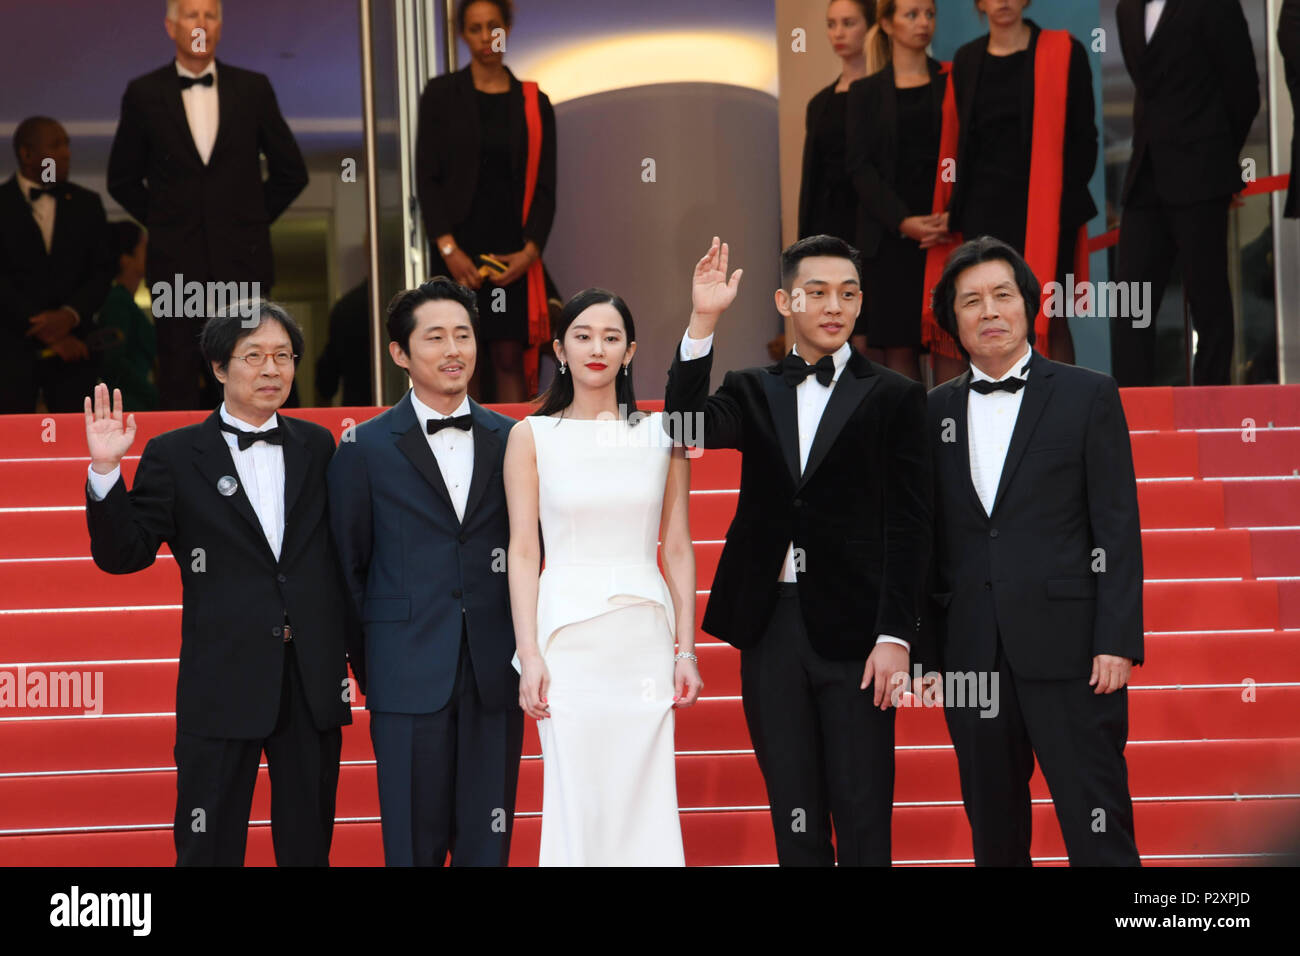 71St jährlichen Filmfestspiele von Cannes - Brennen - Premiere mit: Steven Yeun, Jong-seo Jeon, Ah-in Yoo, Chang-dong Lee Wo: Cannes, Frankreich Wann: 16. Mai 2018 Credit: WENN.com Stockfoto